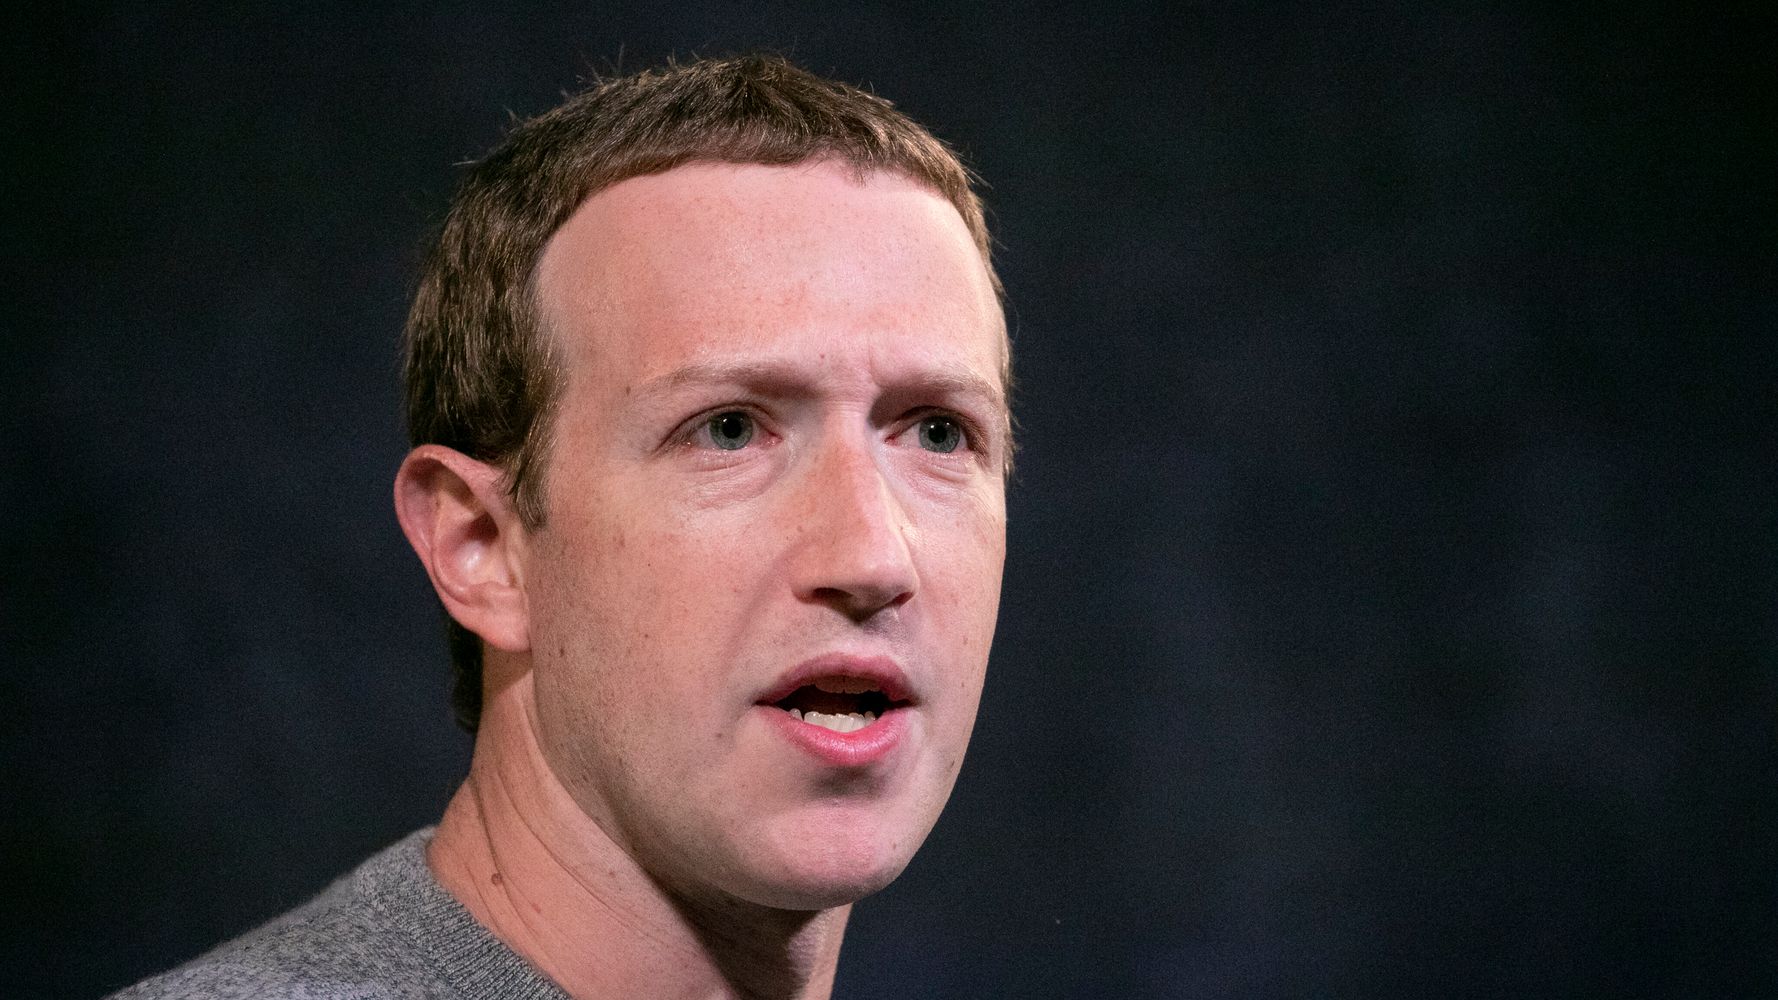 Mark Zuckerberg Defends Facebook After Whistleblower’s Damning Claims